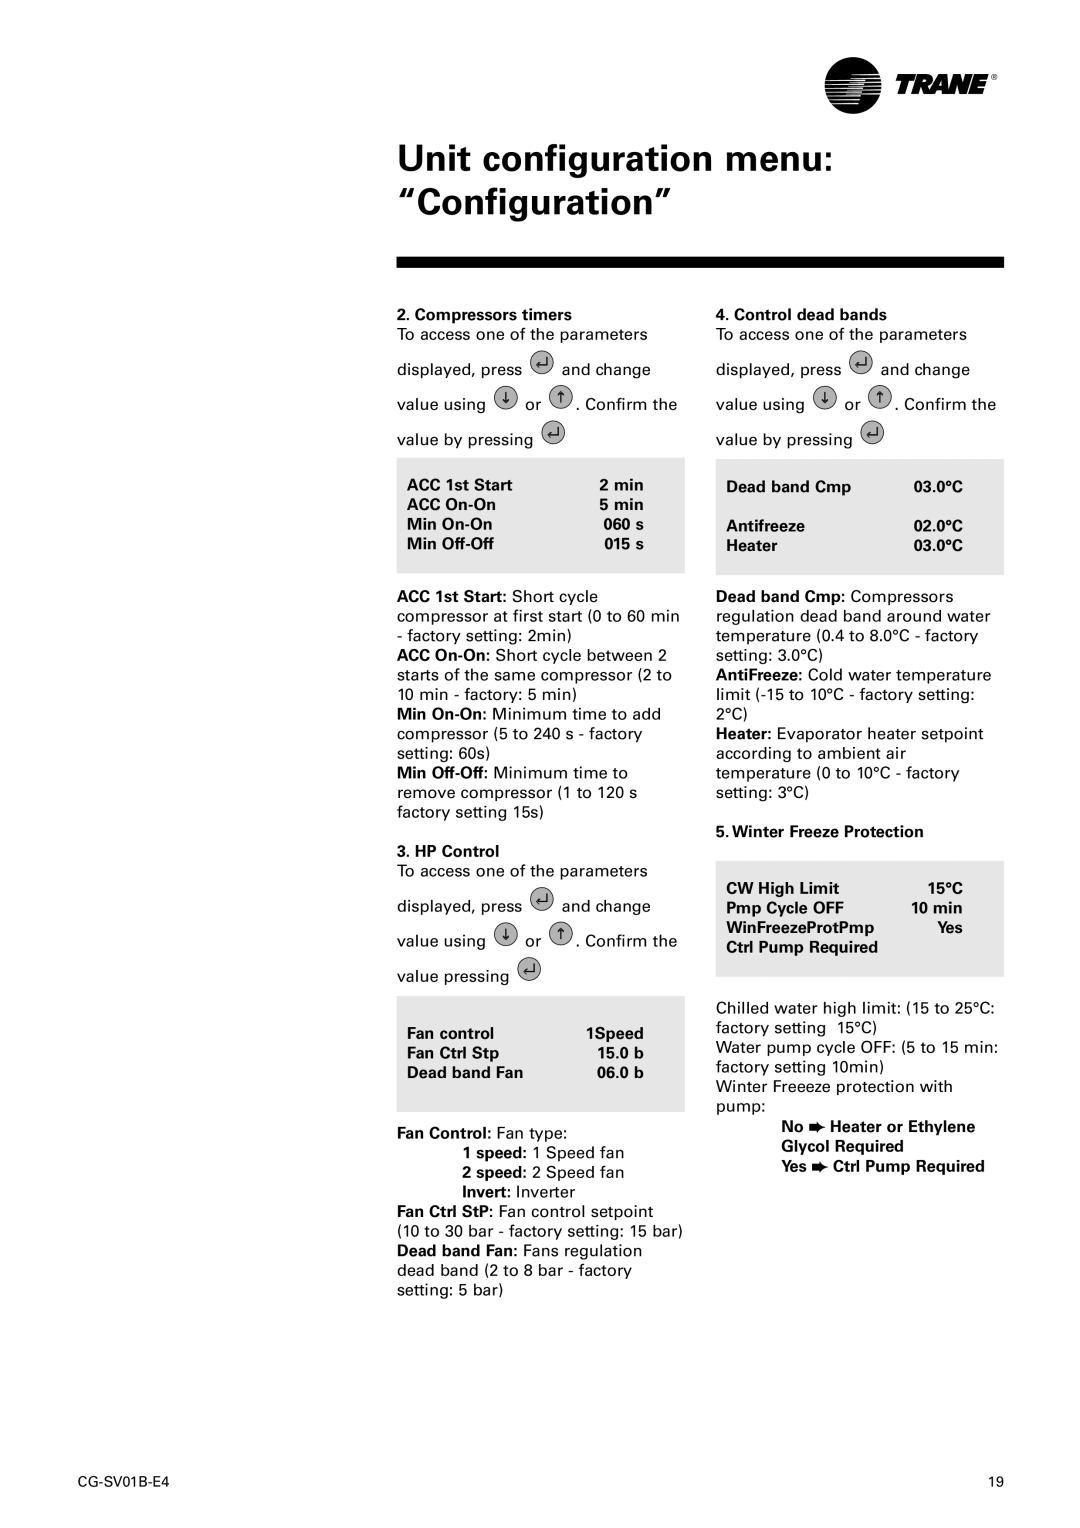 American Standard TRACER CH532 manual Unit configuration menu “Configuration”, 03.0C 